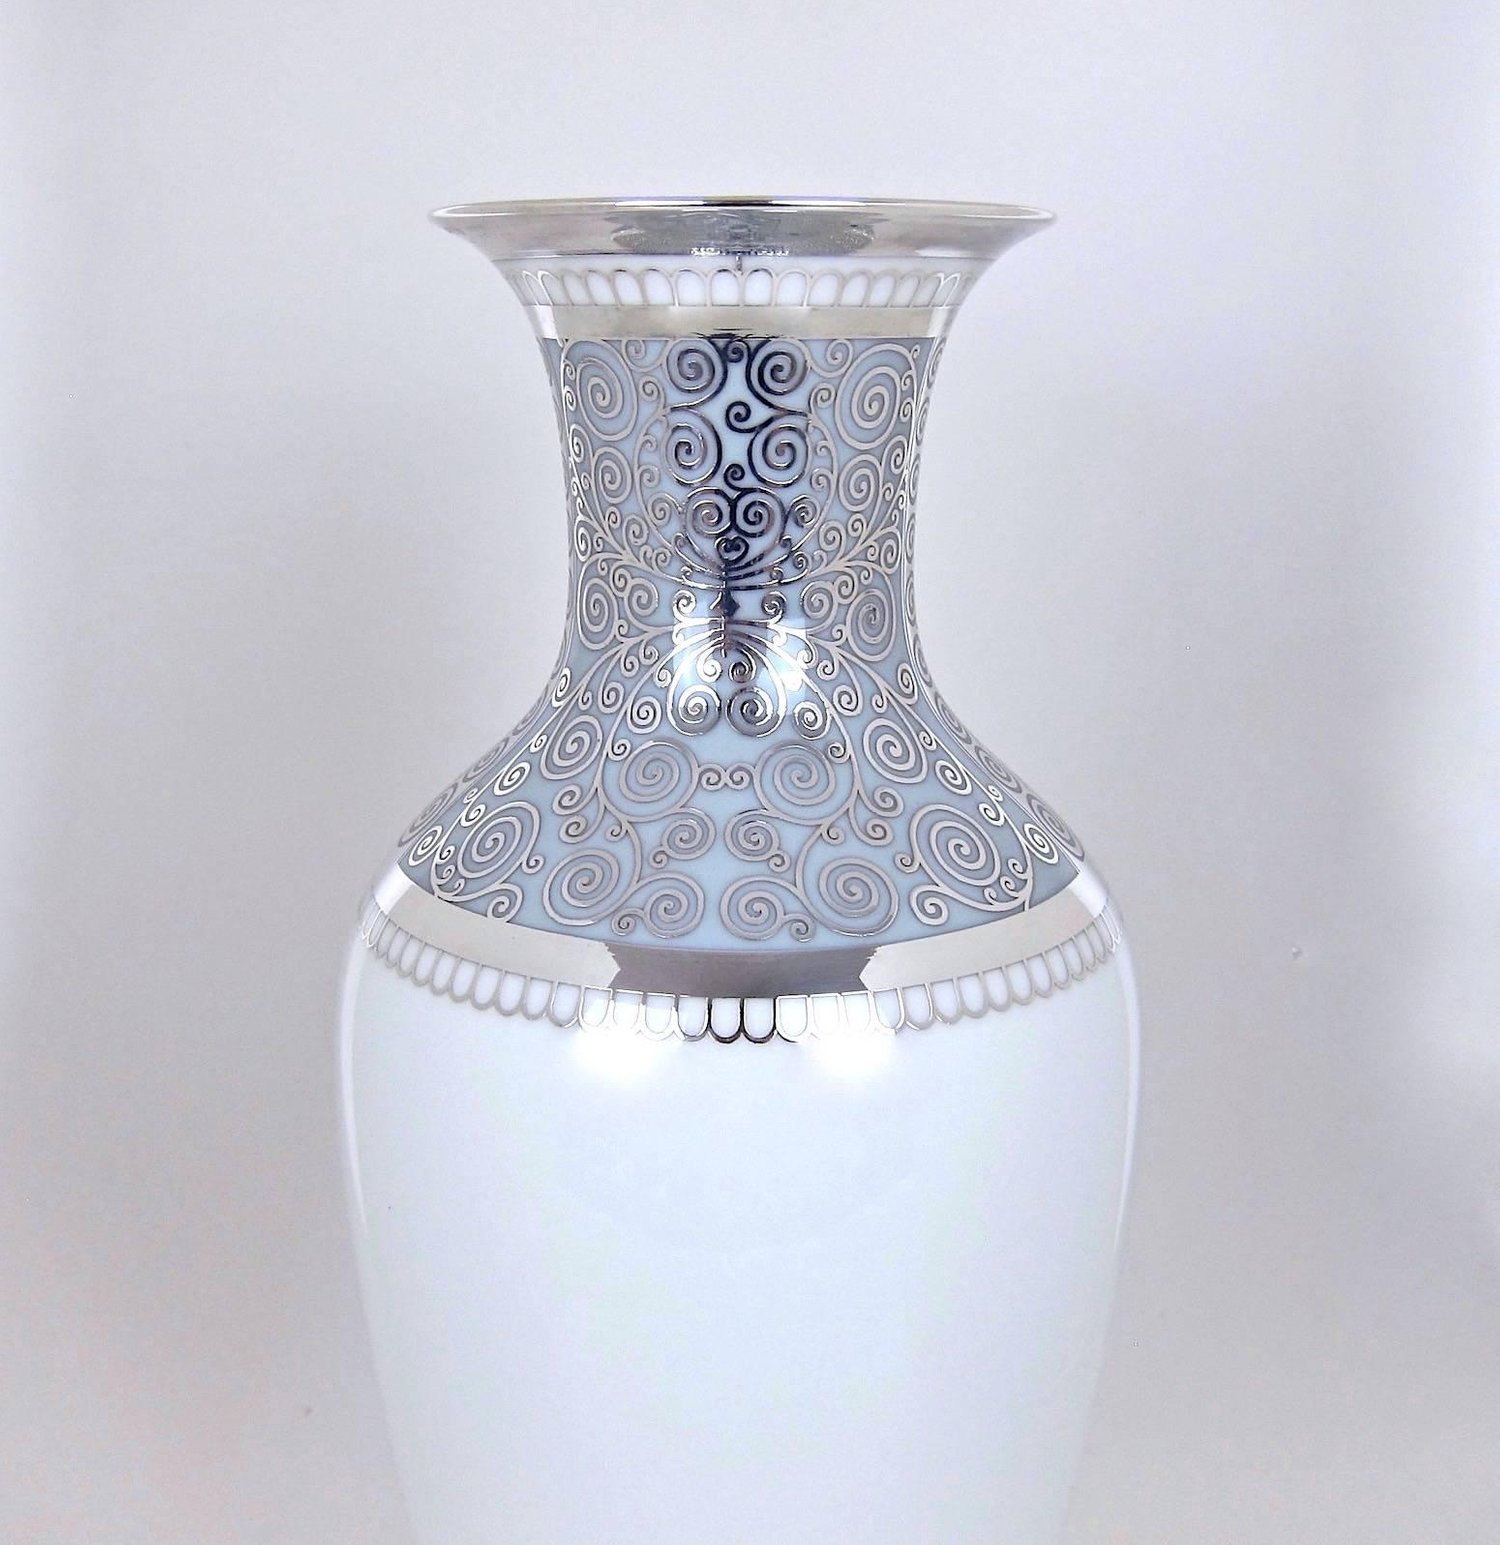 Large Decorative Vases and Urns Of Large Rosenthal Porcelain Silver Overlay Vase at 1stdibs within Rosenthal Porcelain Silver Overlay Vase 06 Master